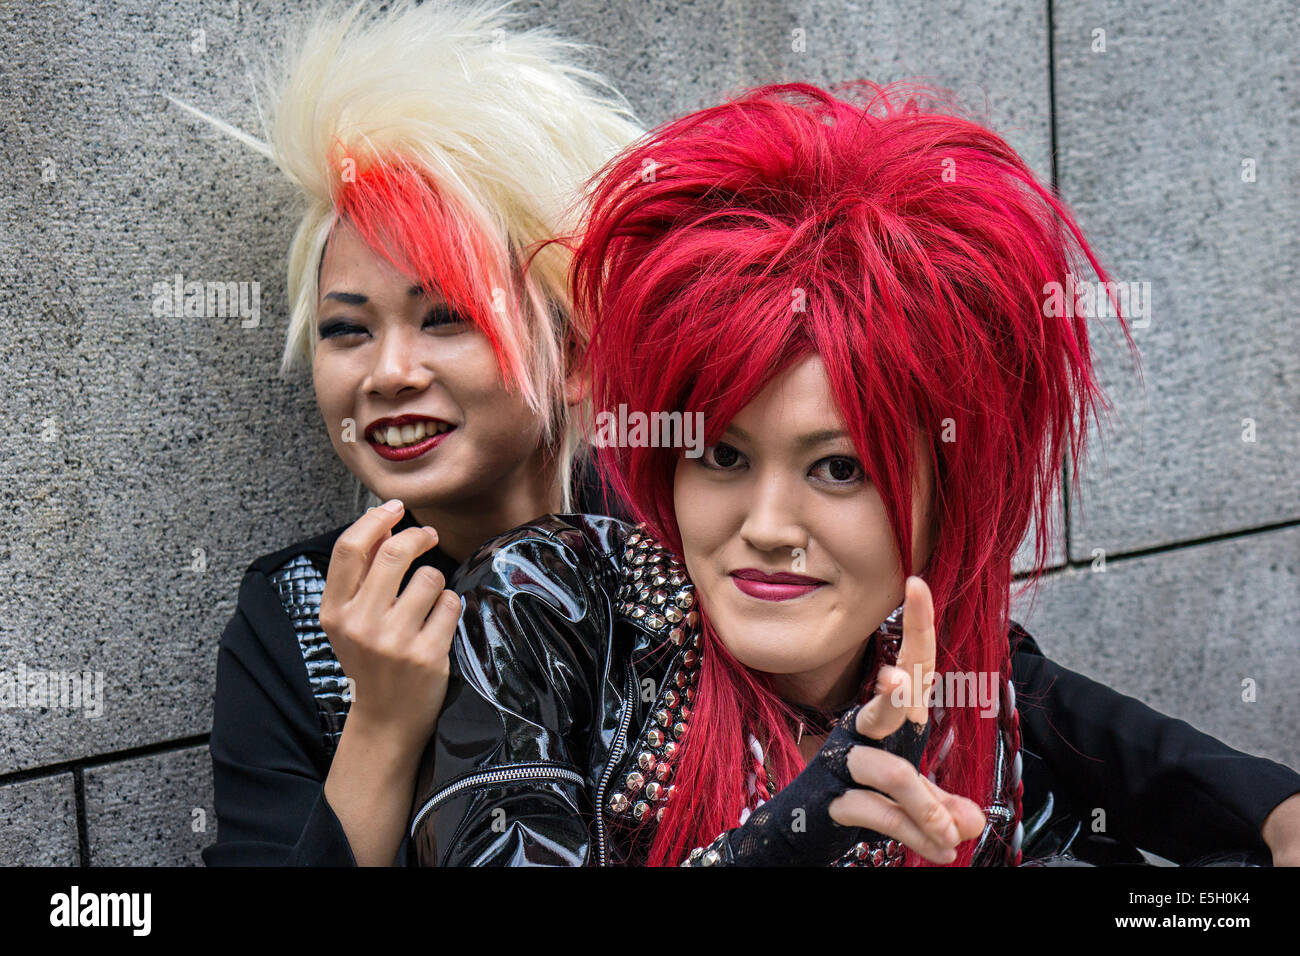 Rockers costumes in Harajuku district, Tokyo, Japan. Stock Photo